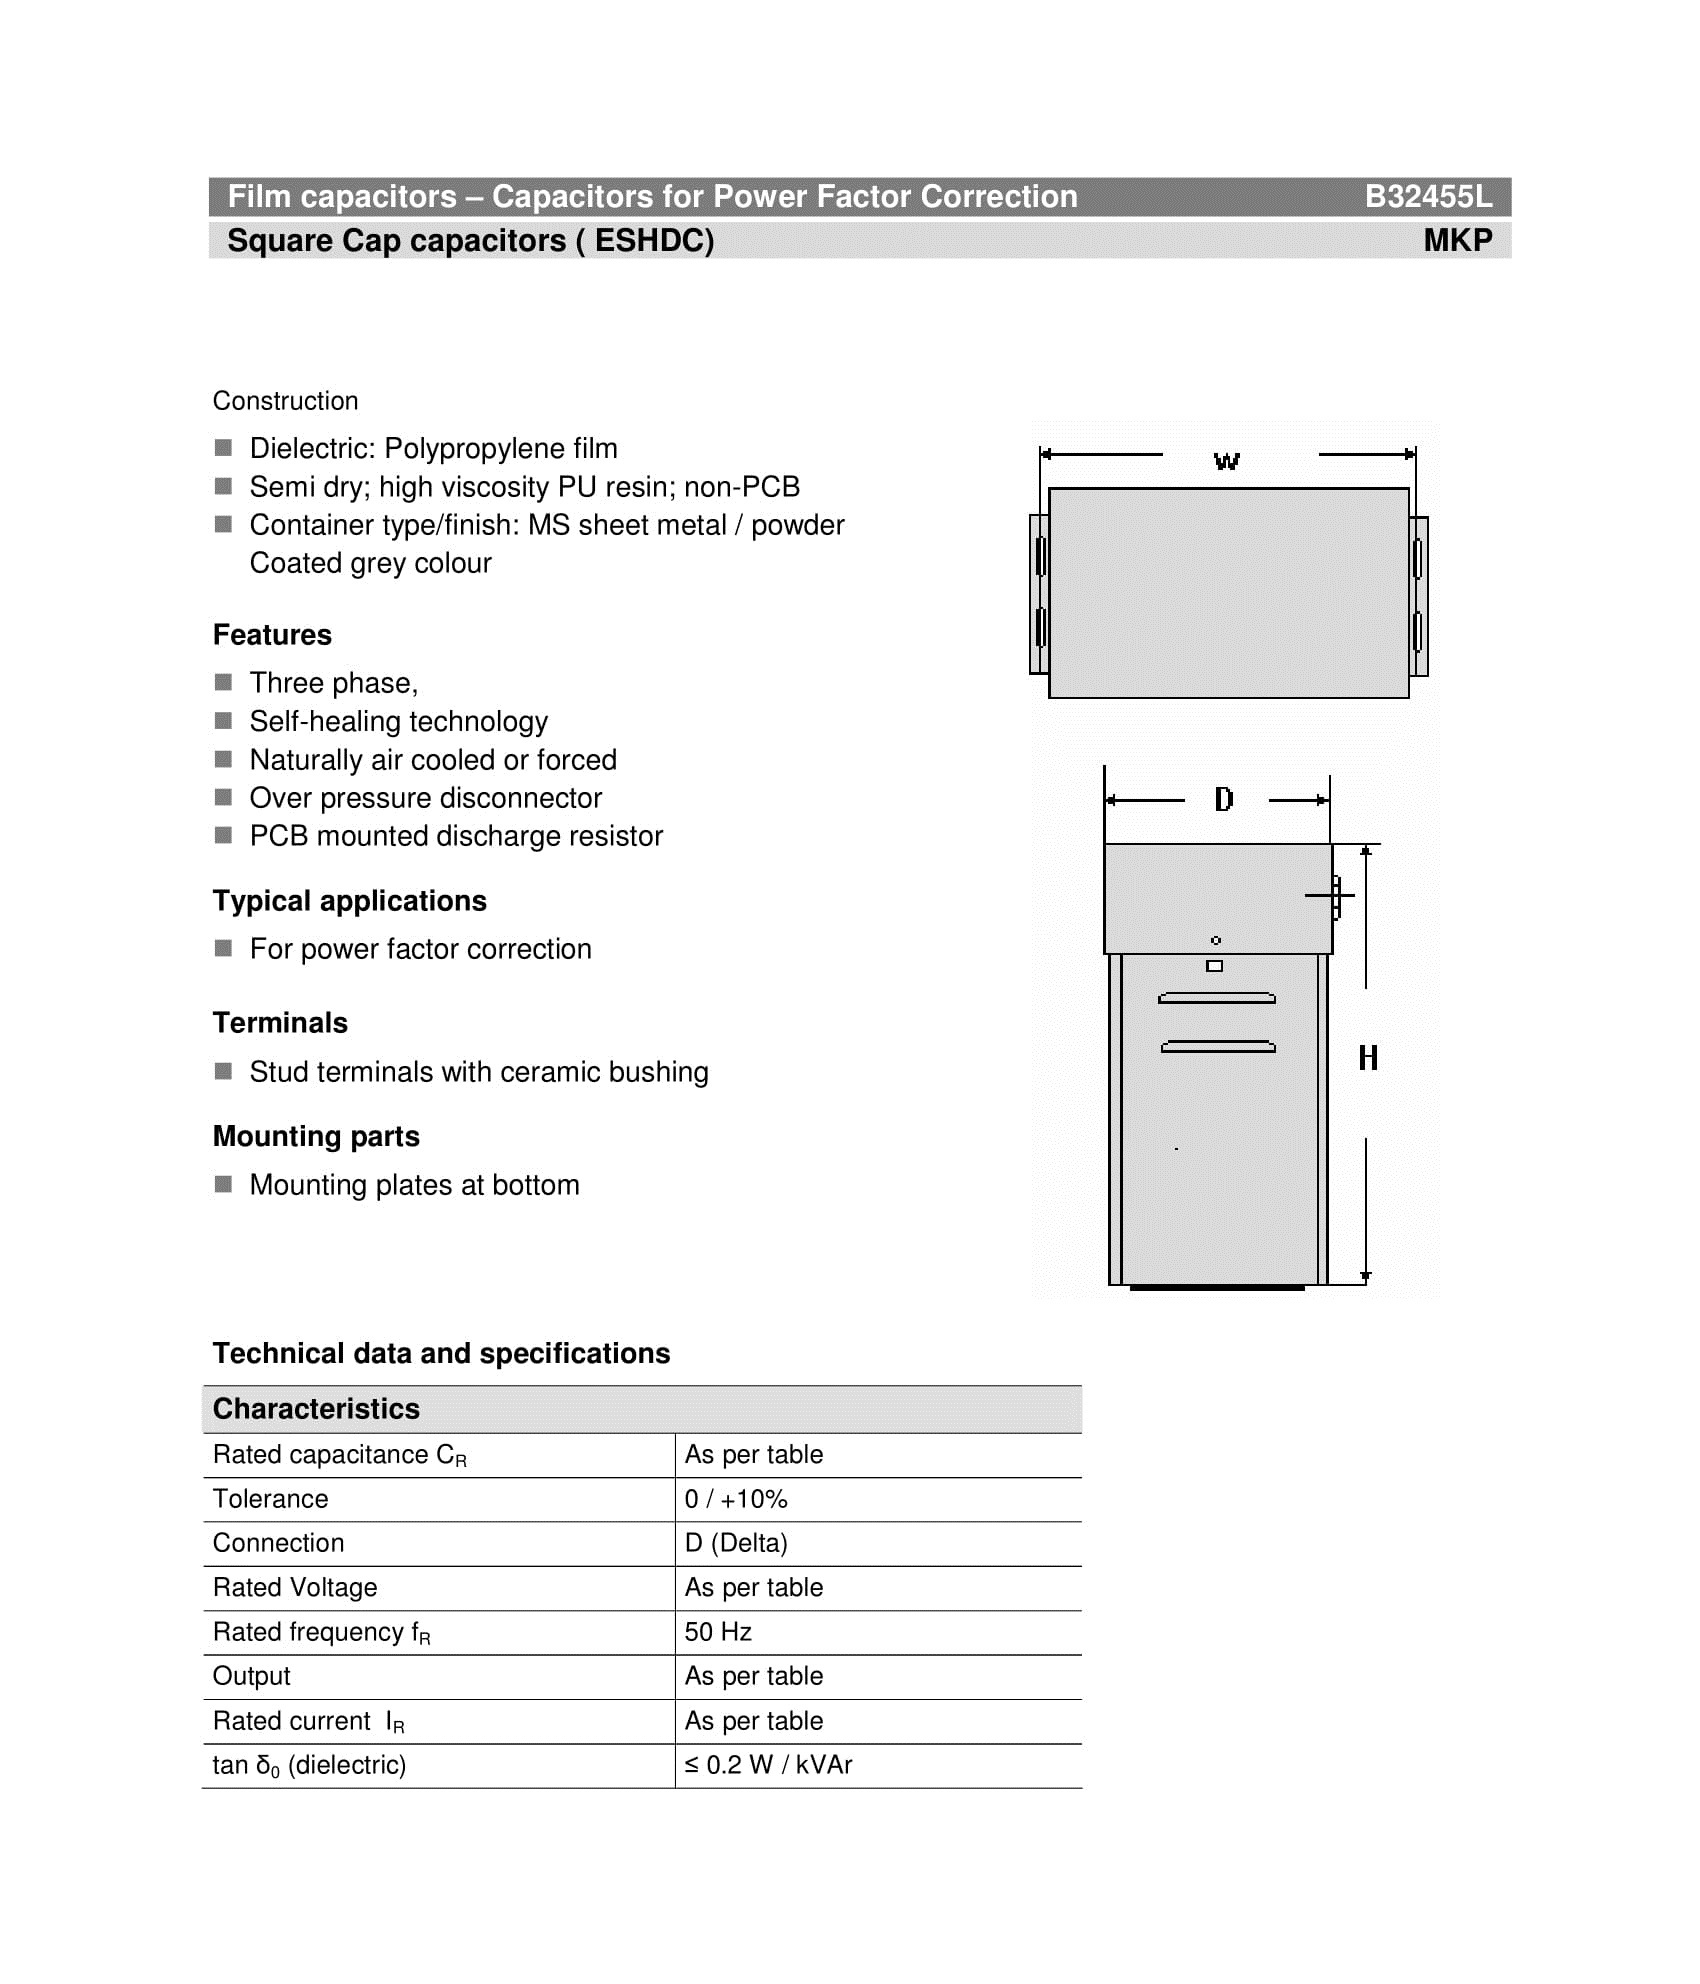 Square Cap Capacitors (ESHDC)